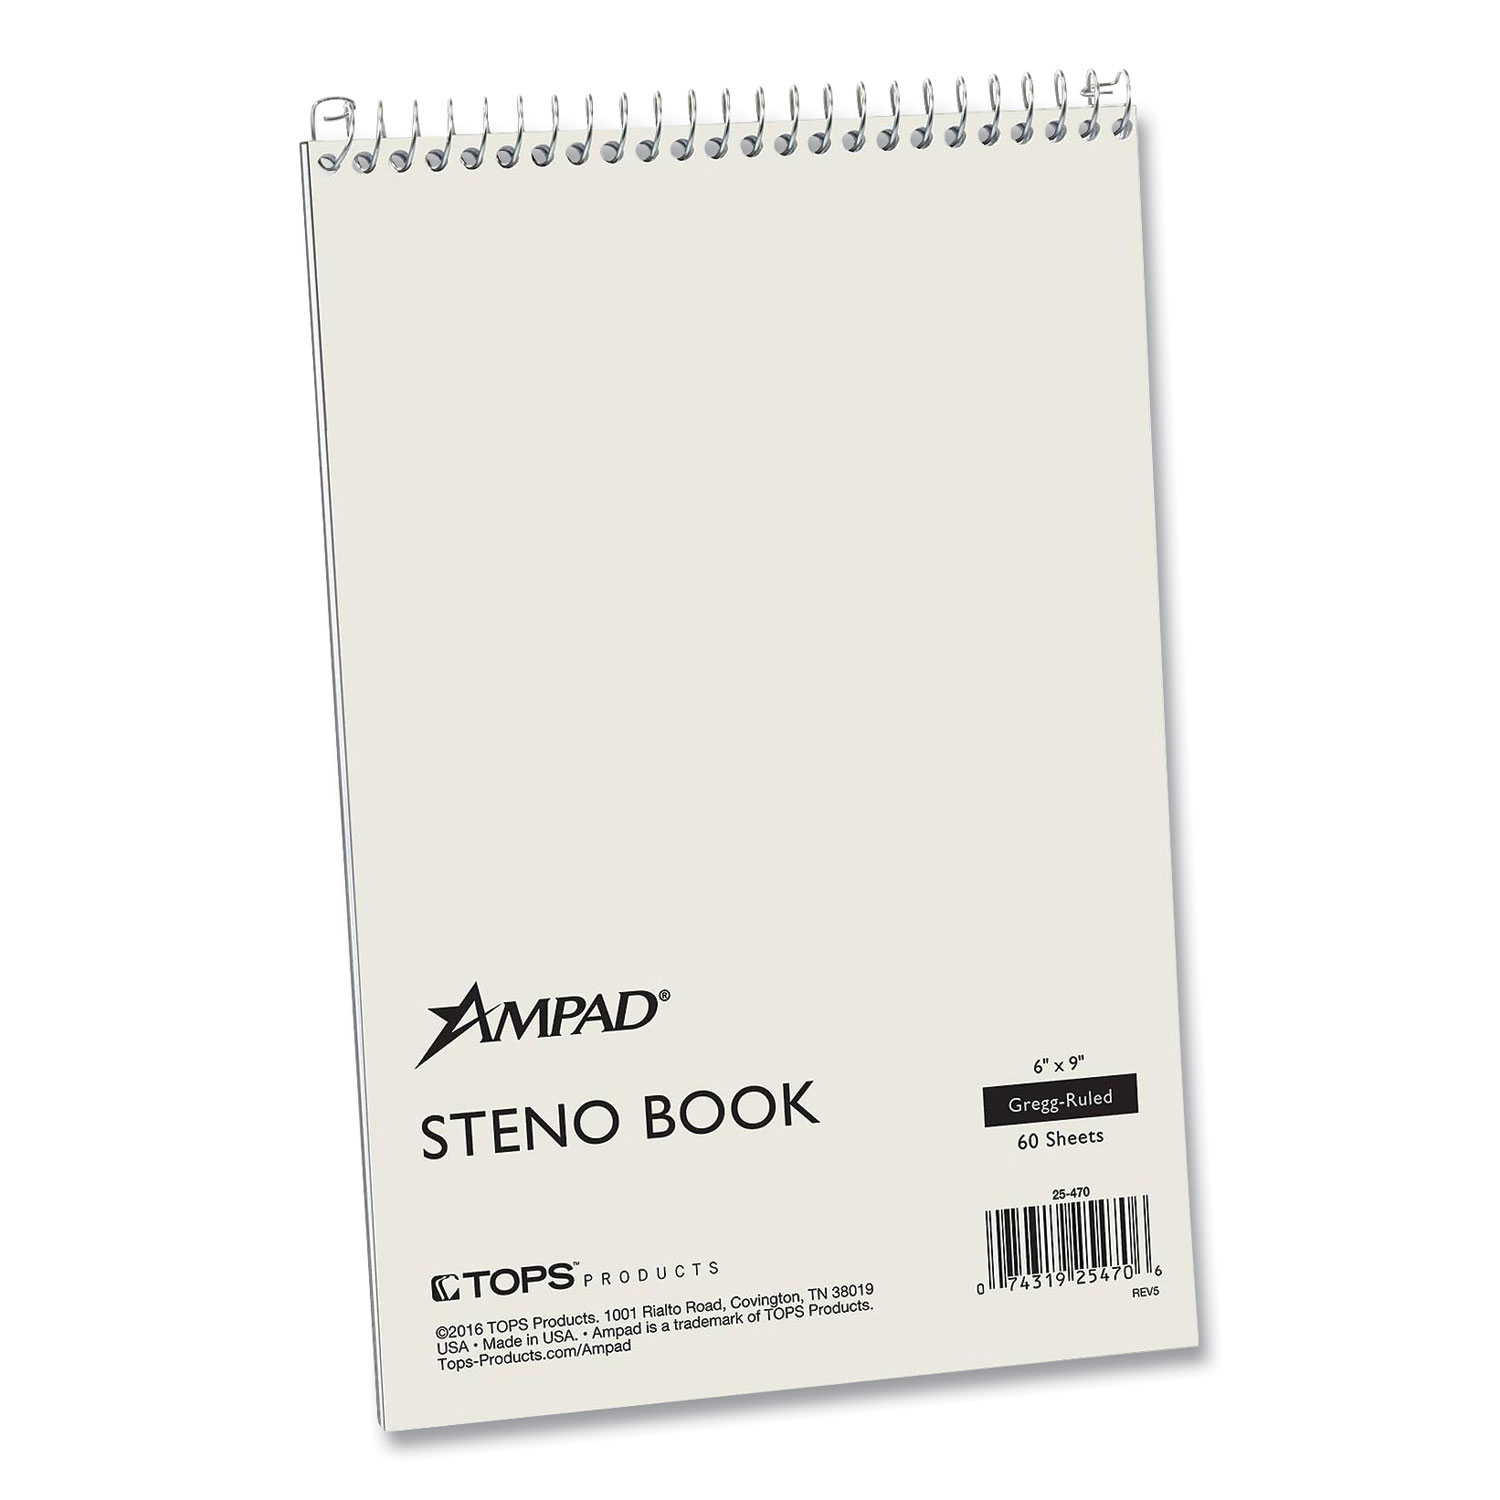 Ampad® Steno Books, Pitman Rule, White Cover, 6 x 9, 60 Green Tint Sheets